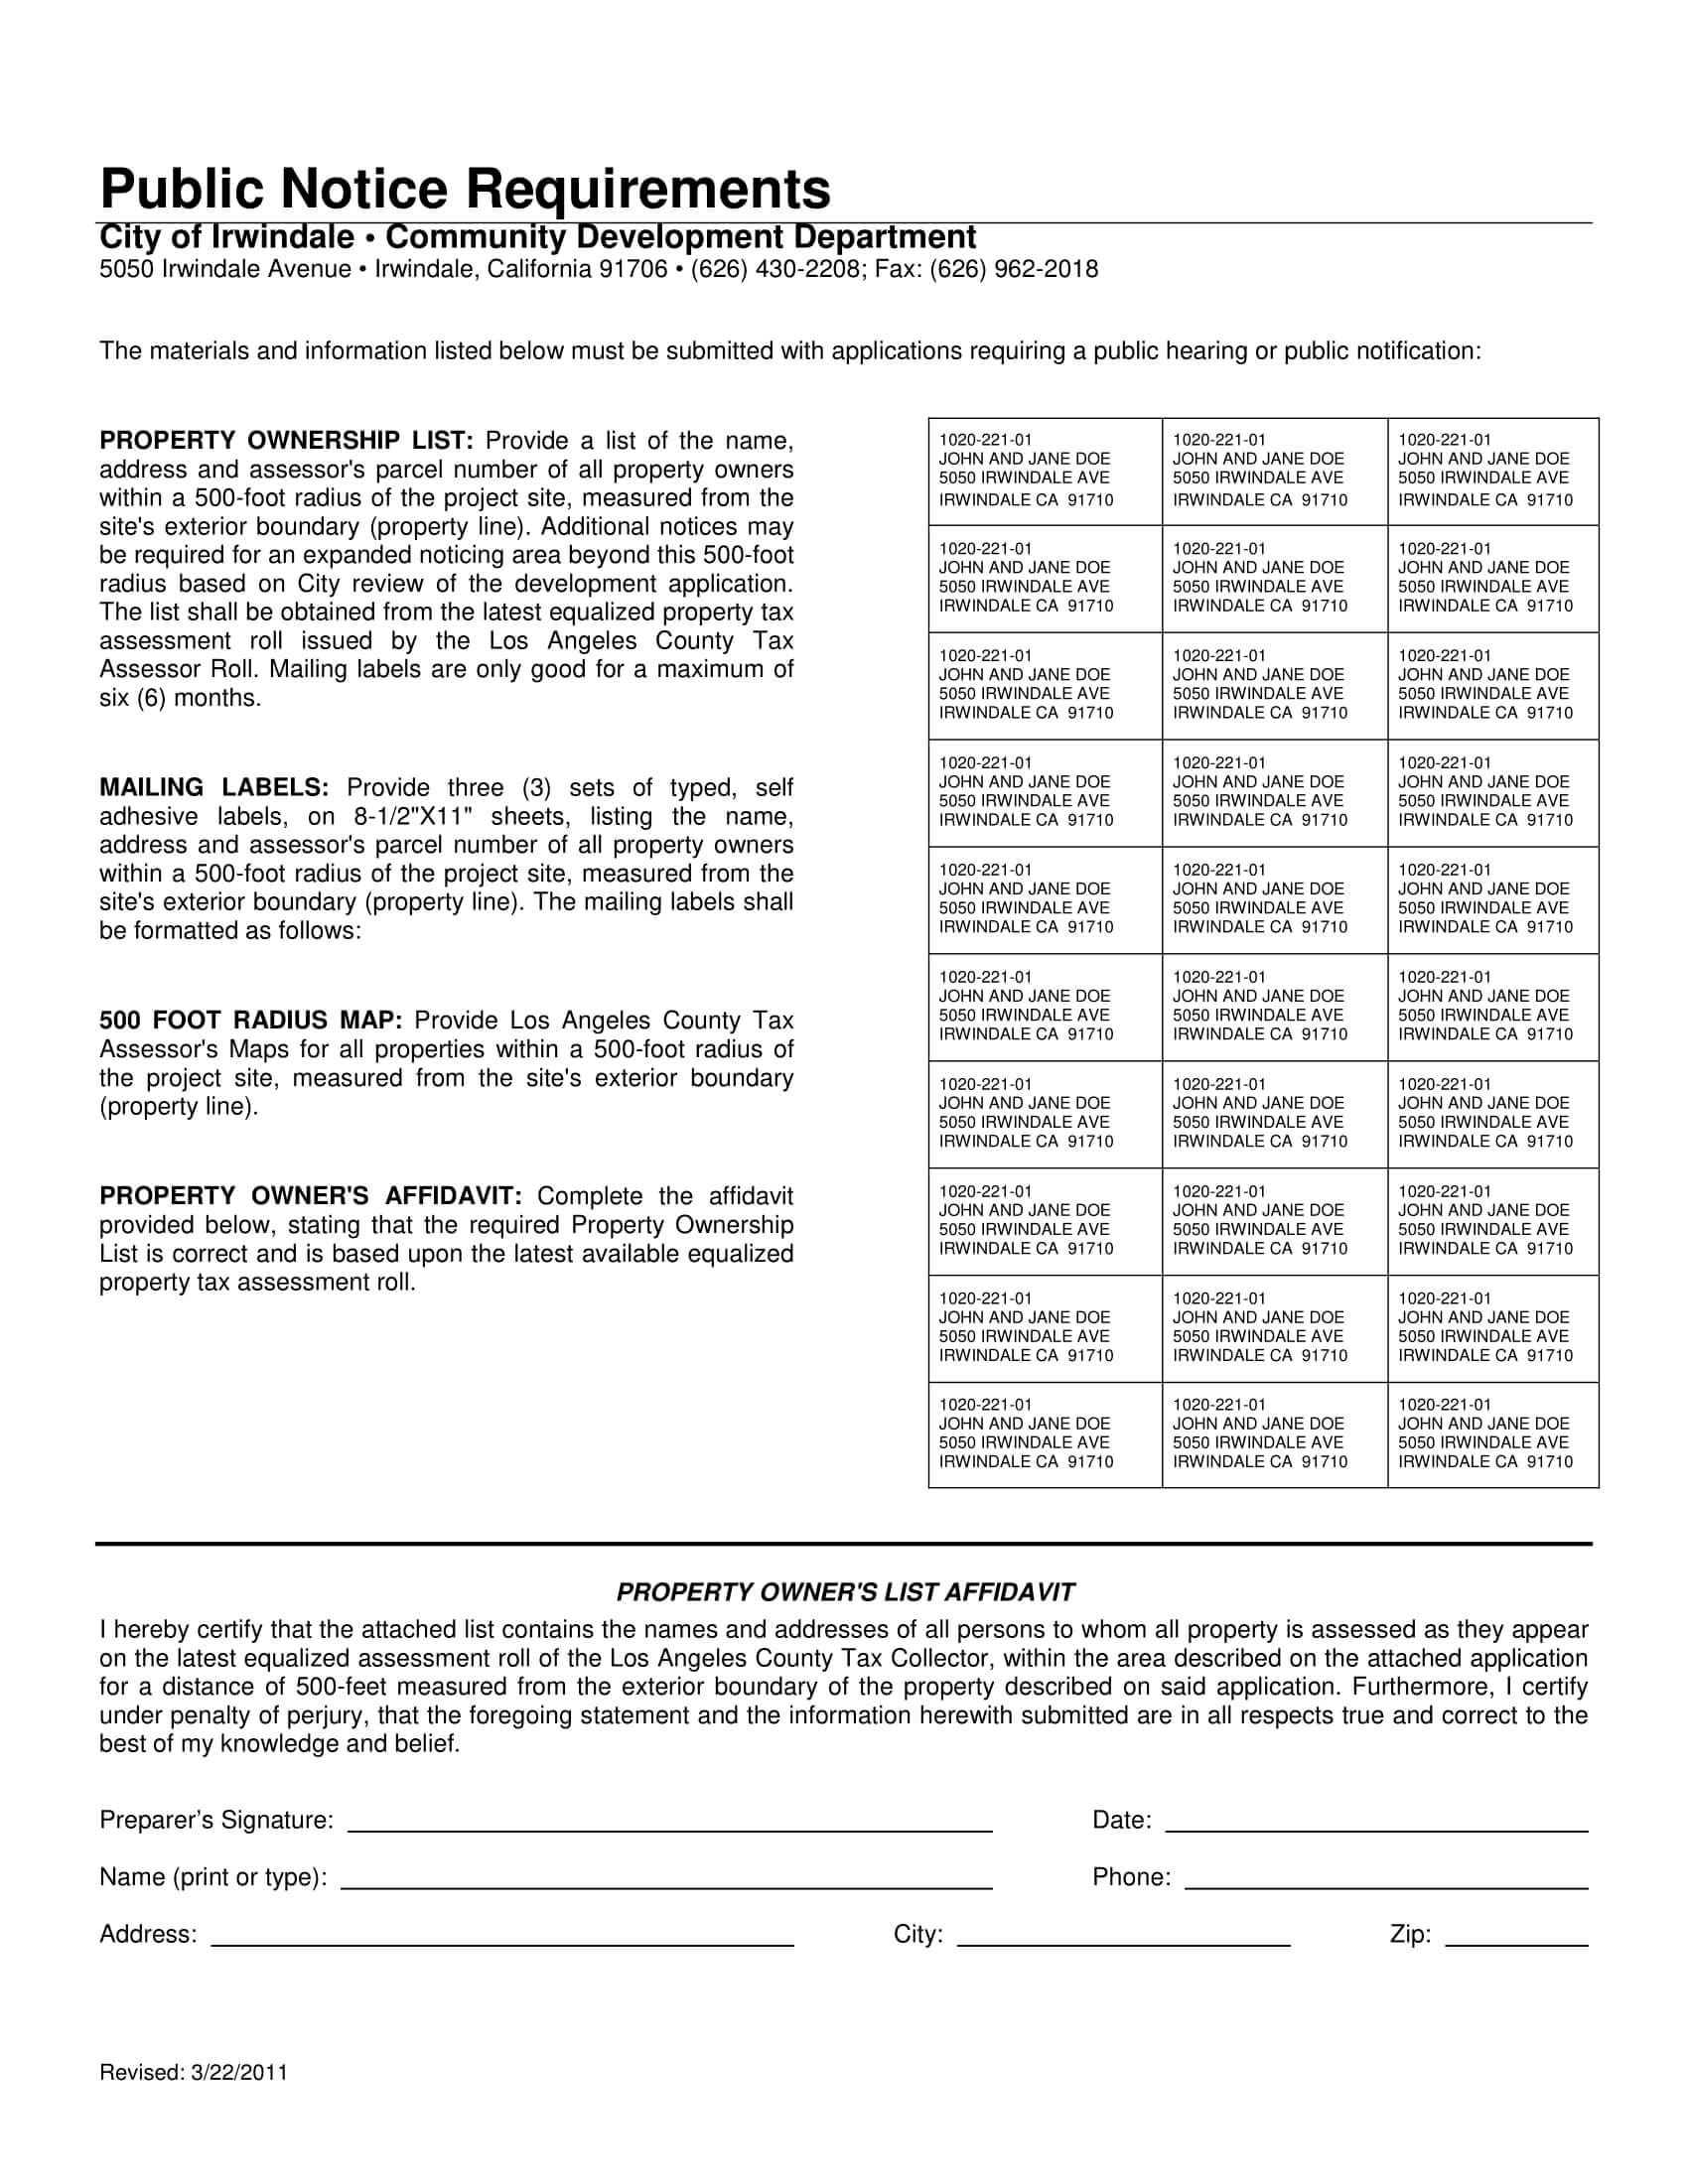 Irwindale-Public Notice-Radius Map-Property Owner List-500 Foot-Labels